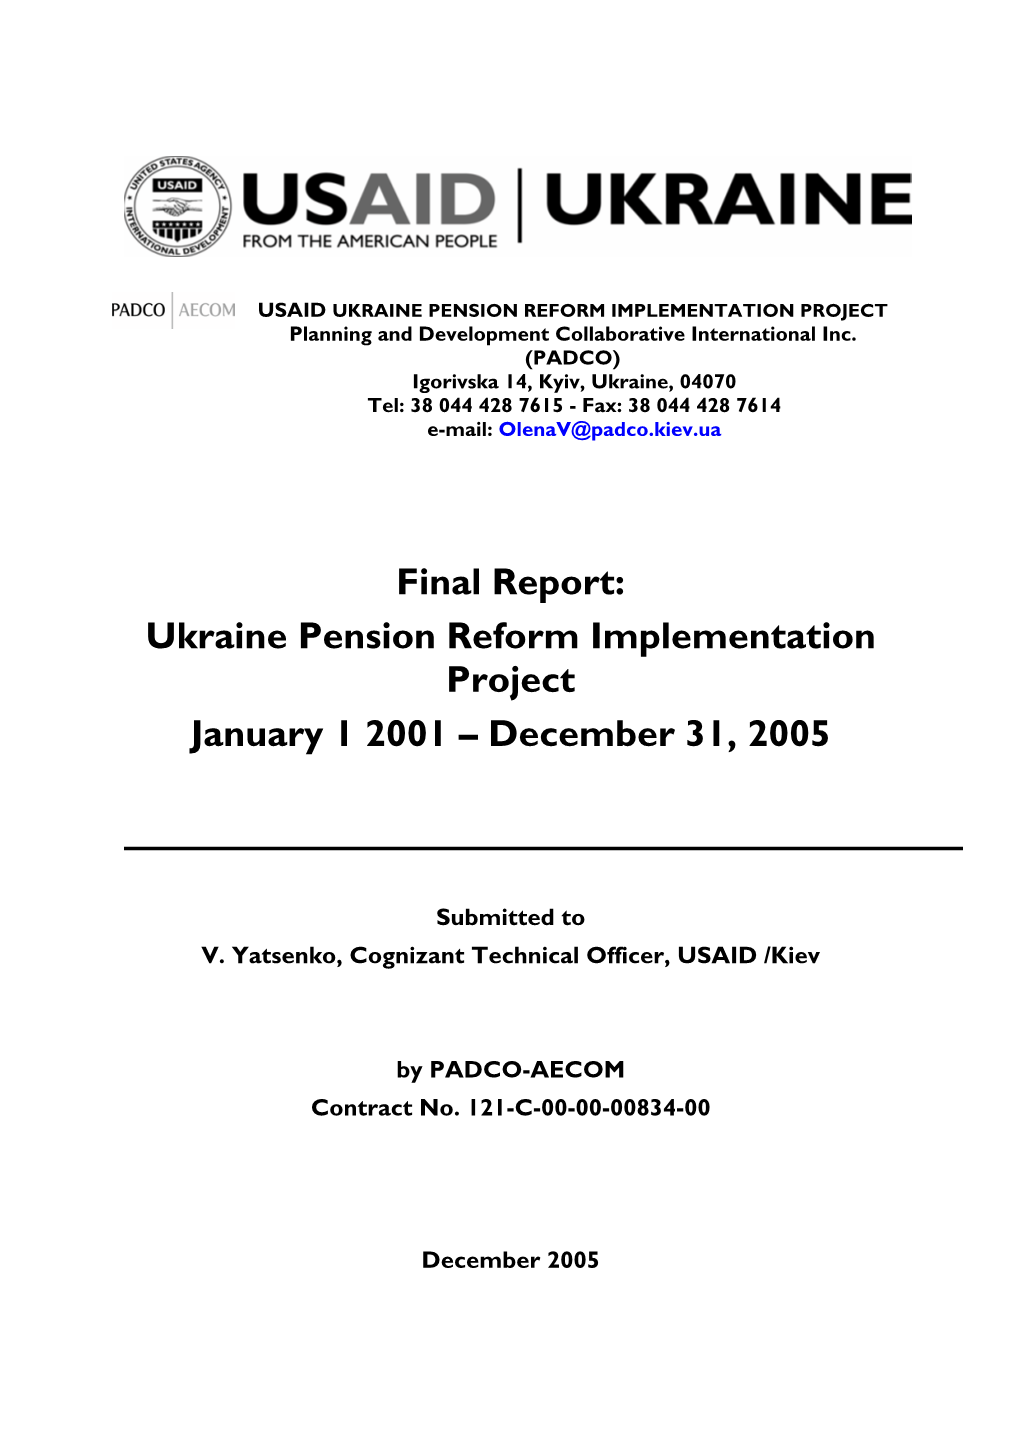 UKRAINE PENSION REFORM IMPLEMENTATION PROJECT Planning and Development Collaborative International Inc